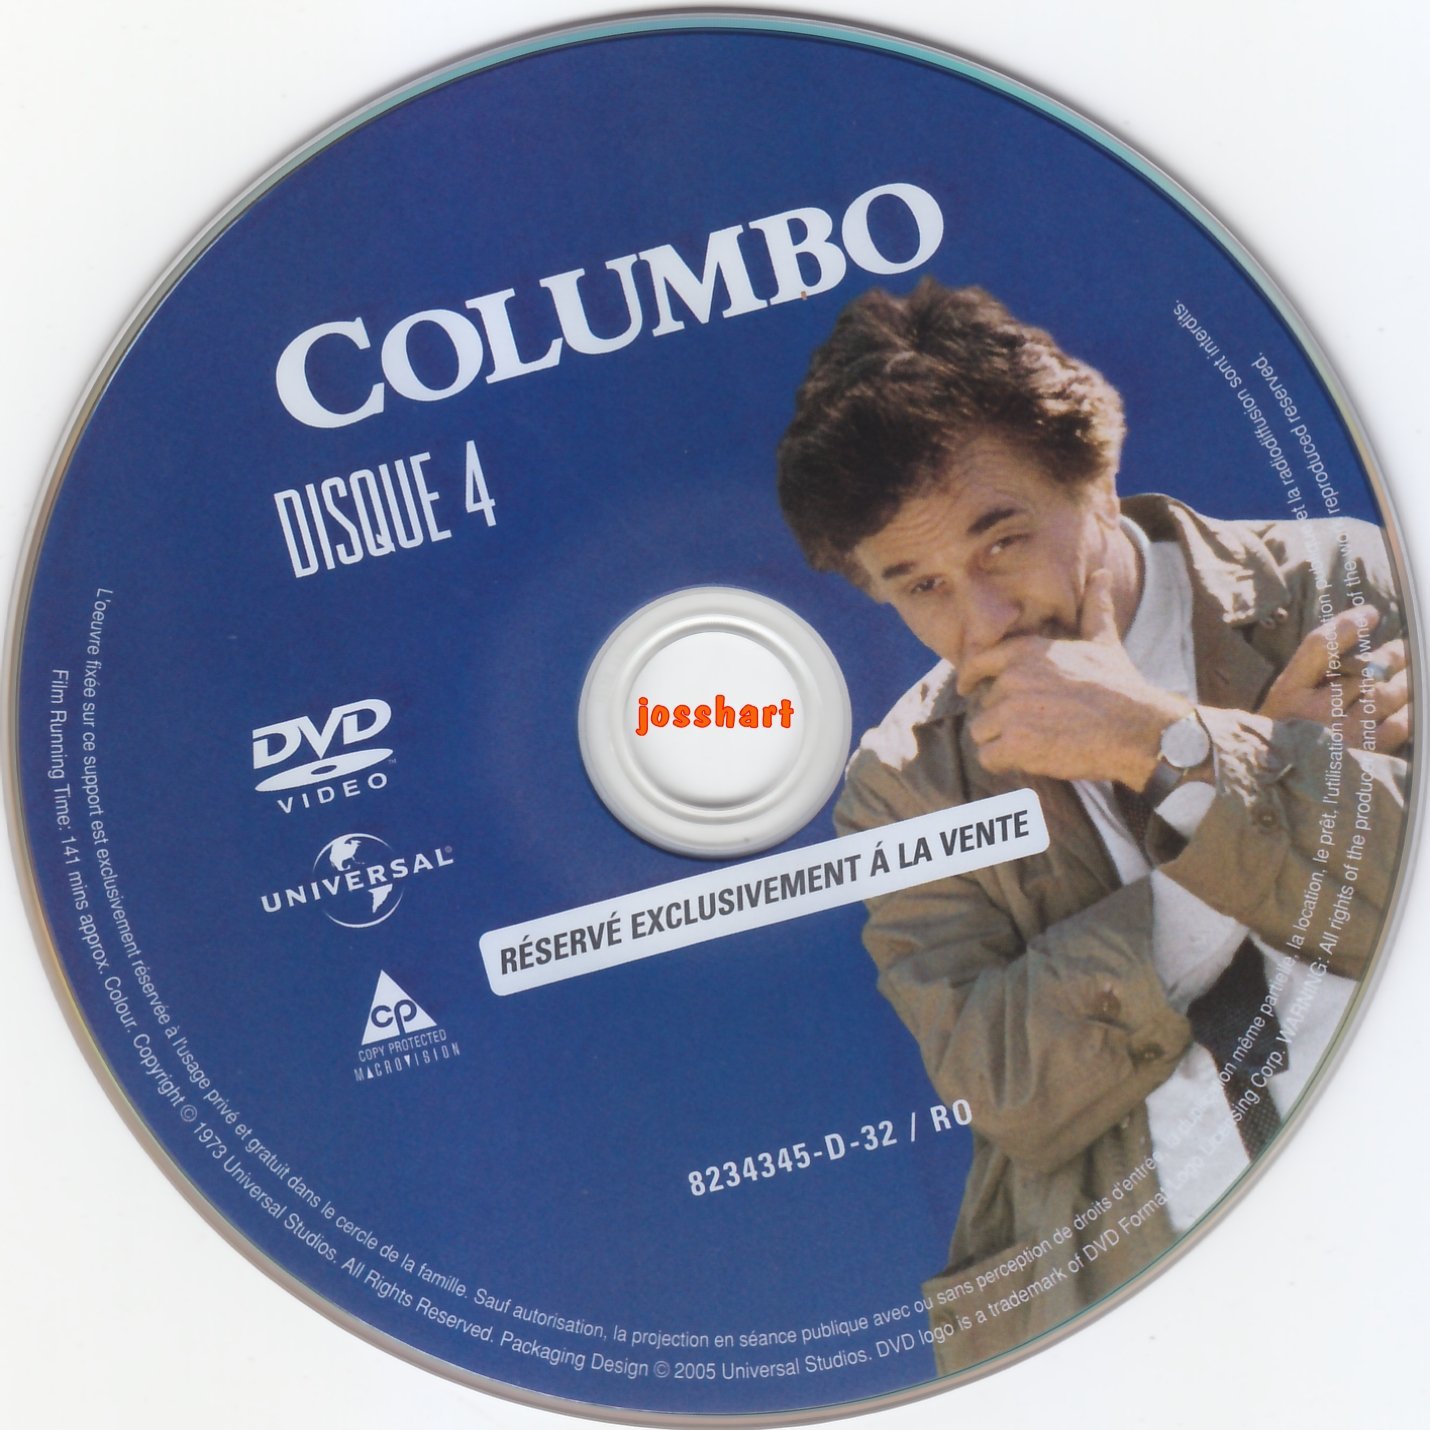 Columbo S2 DISC4